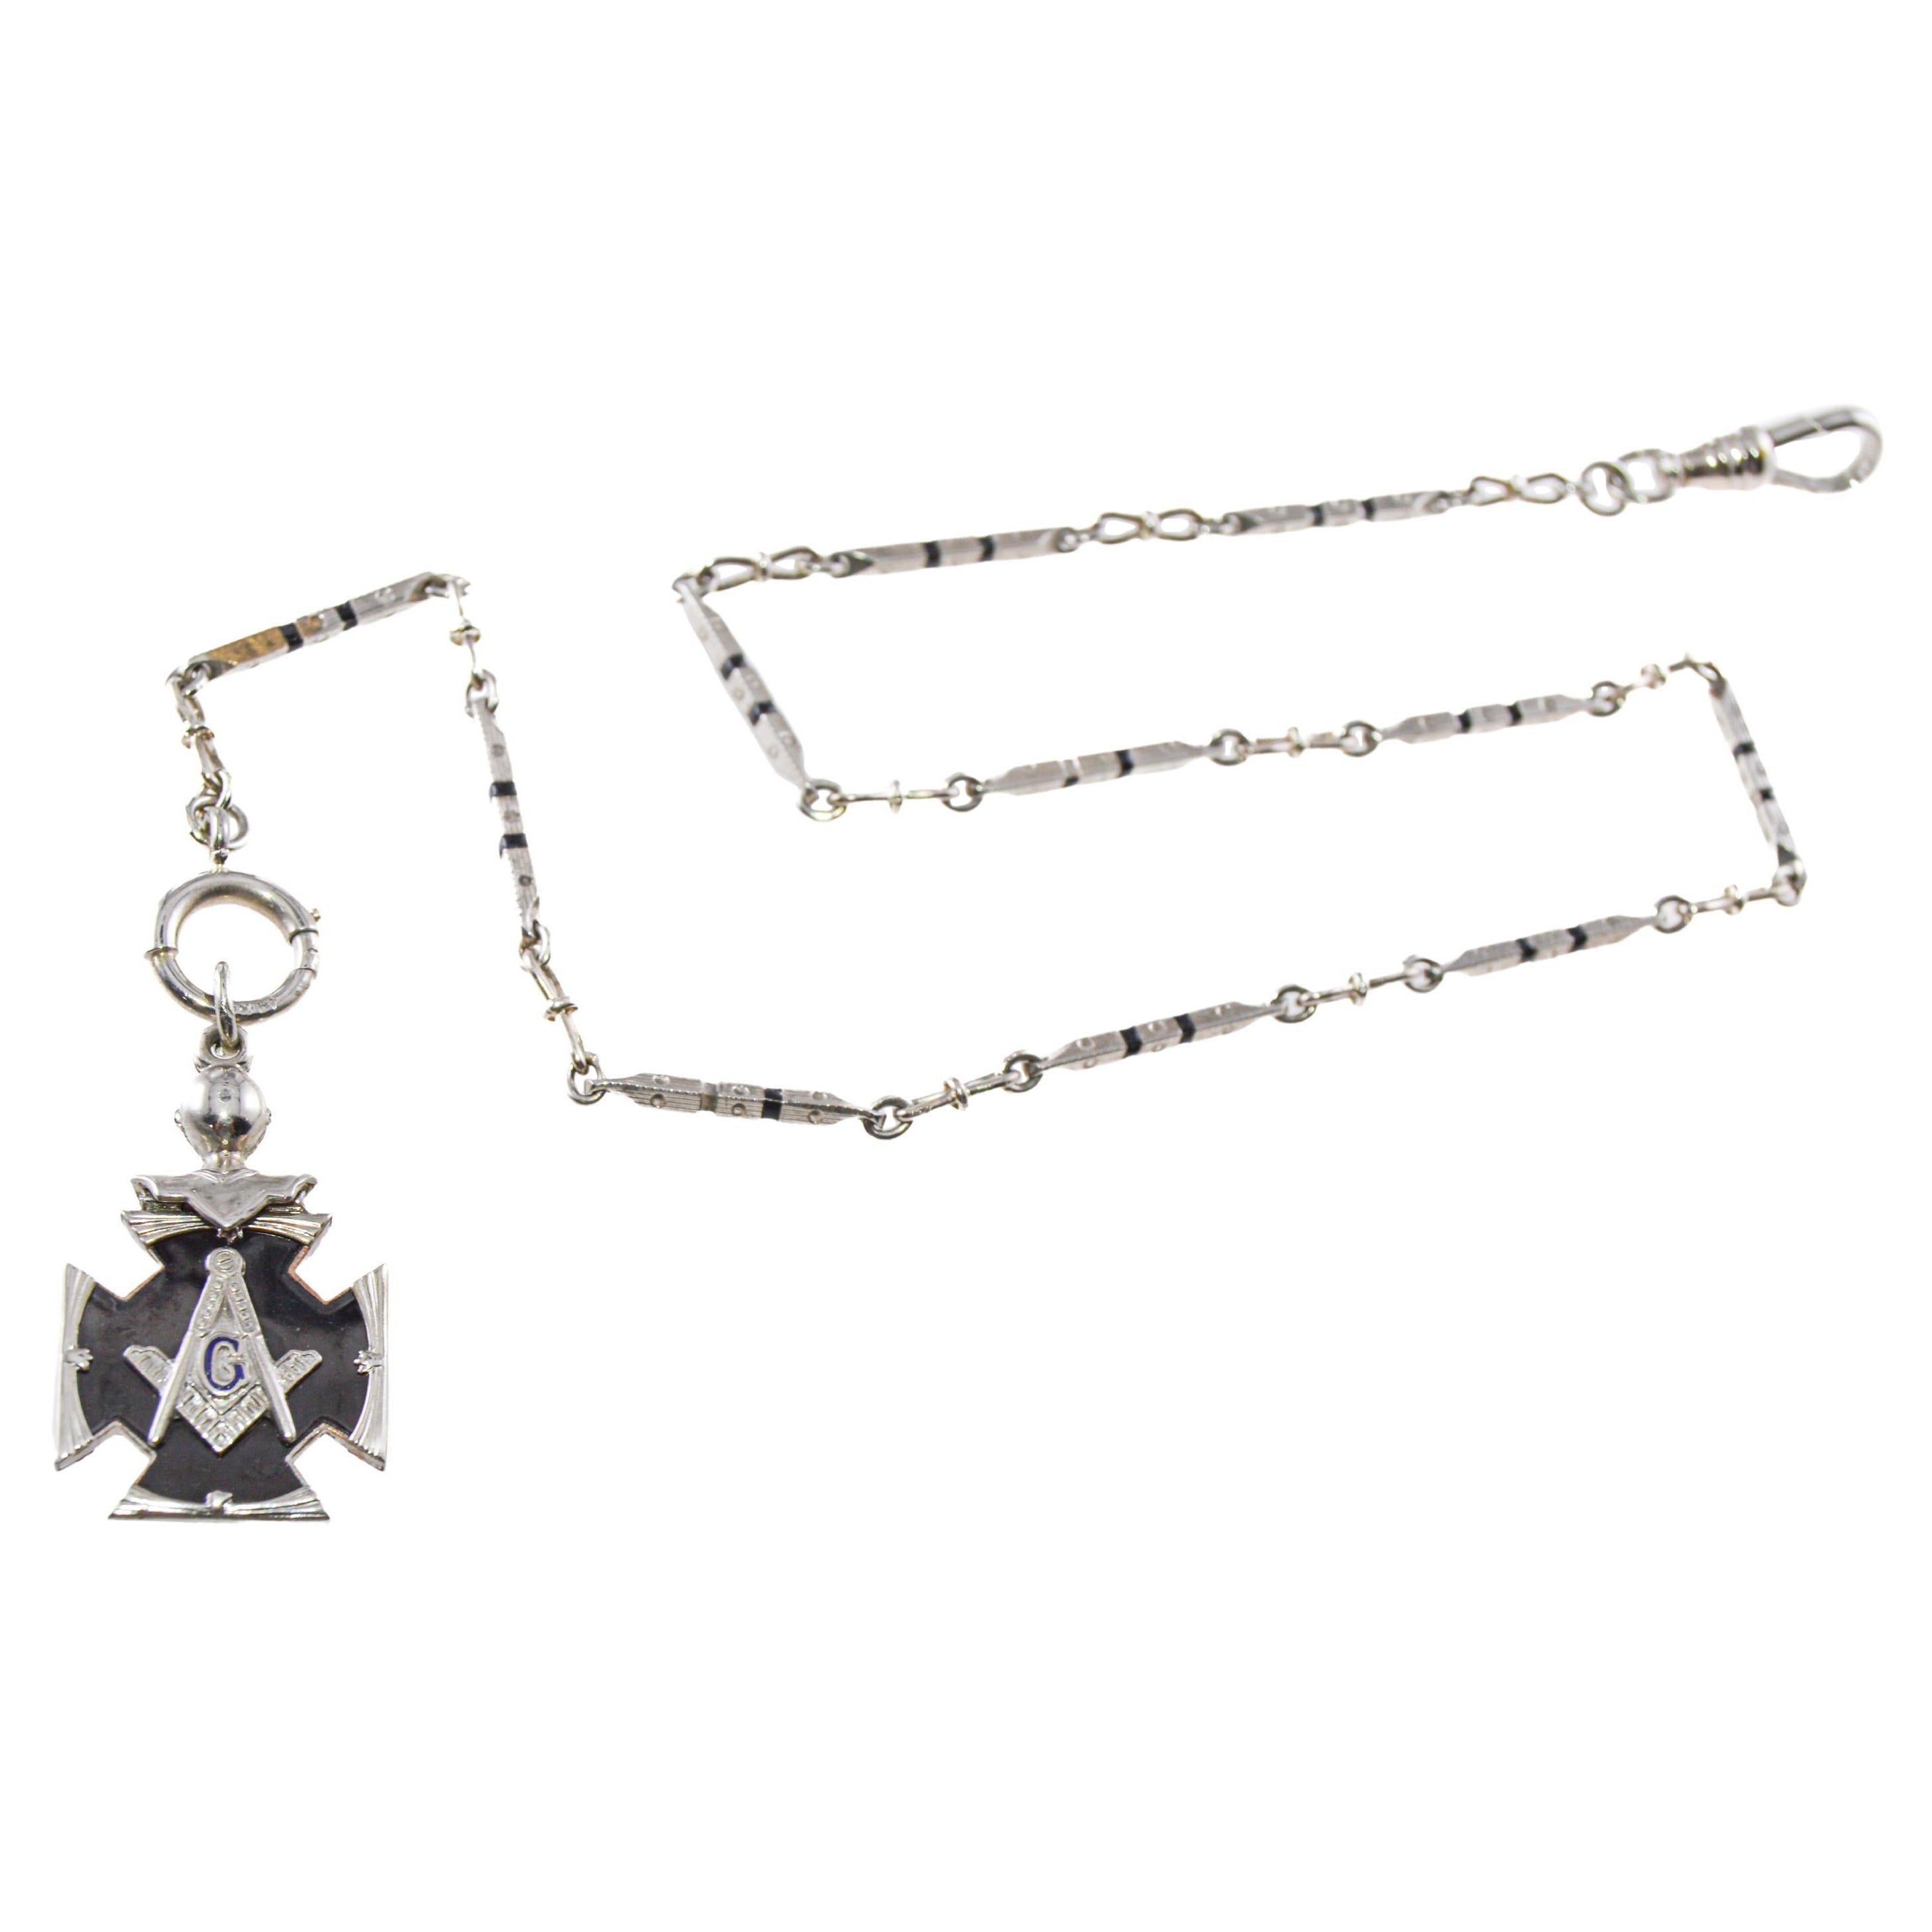 14Kt White Gold & Black Enamel Necklace, Bracelet or Pocket Chain & Masonic Fob